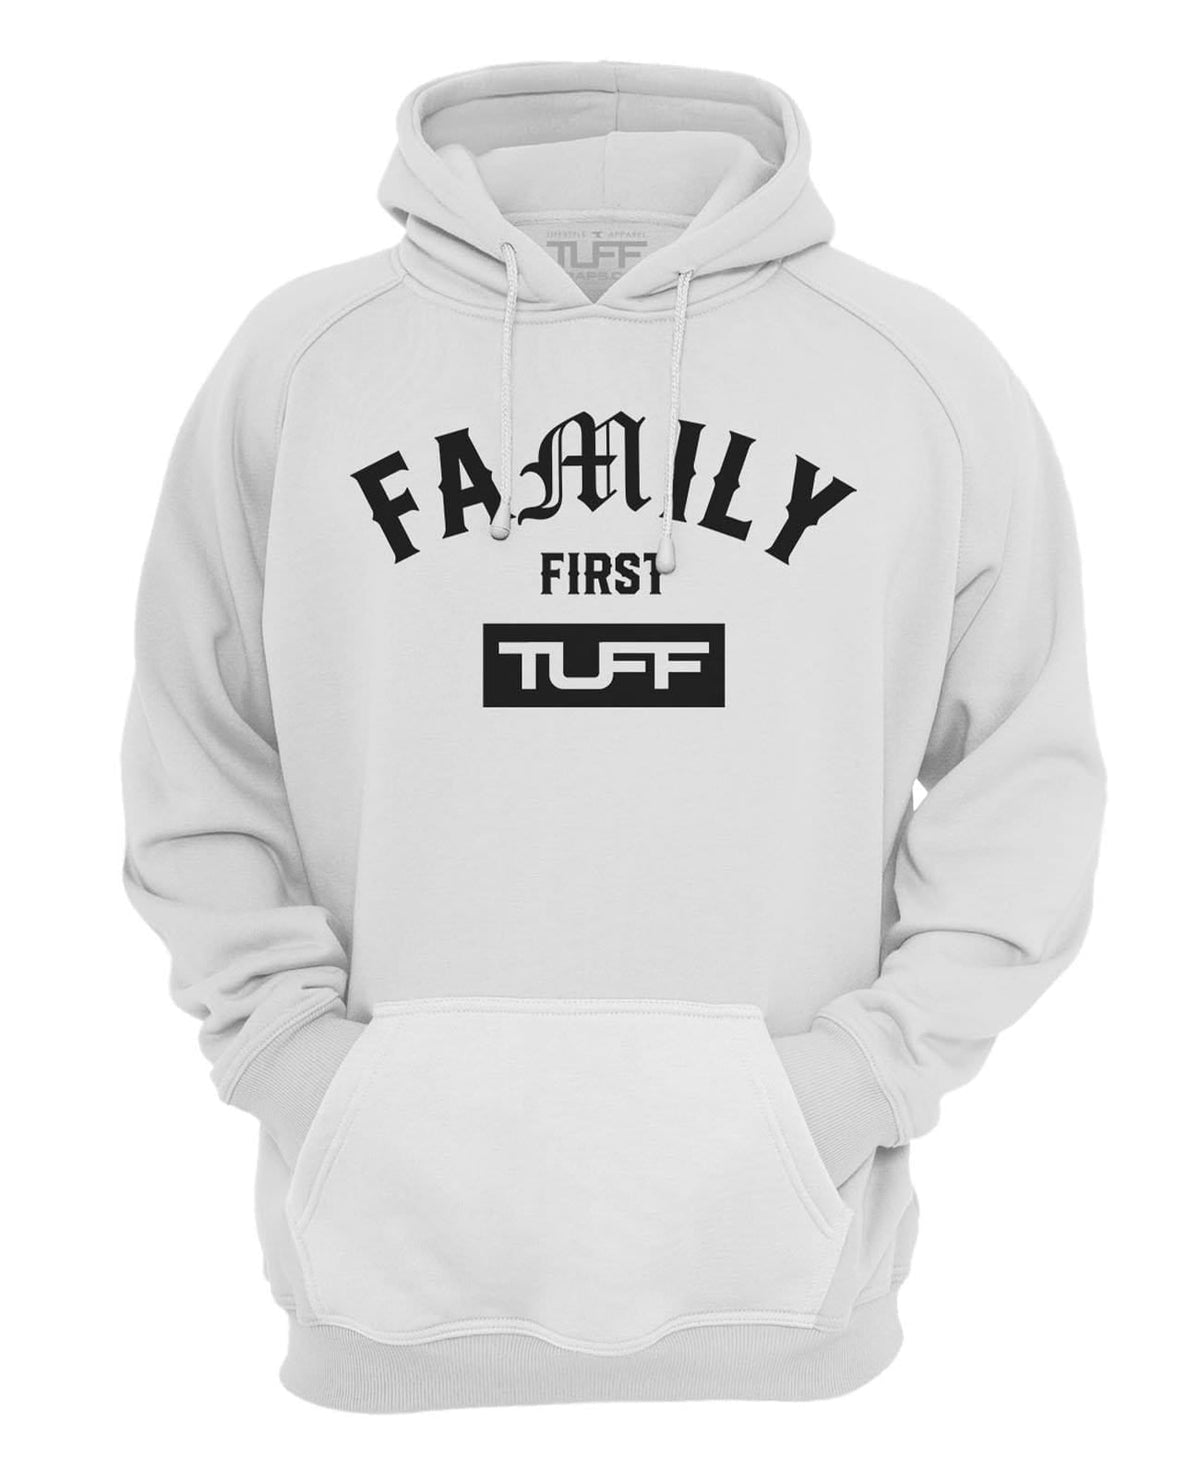 Family First Hooded Sweatshirt XS / White TuffWraps.com